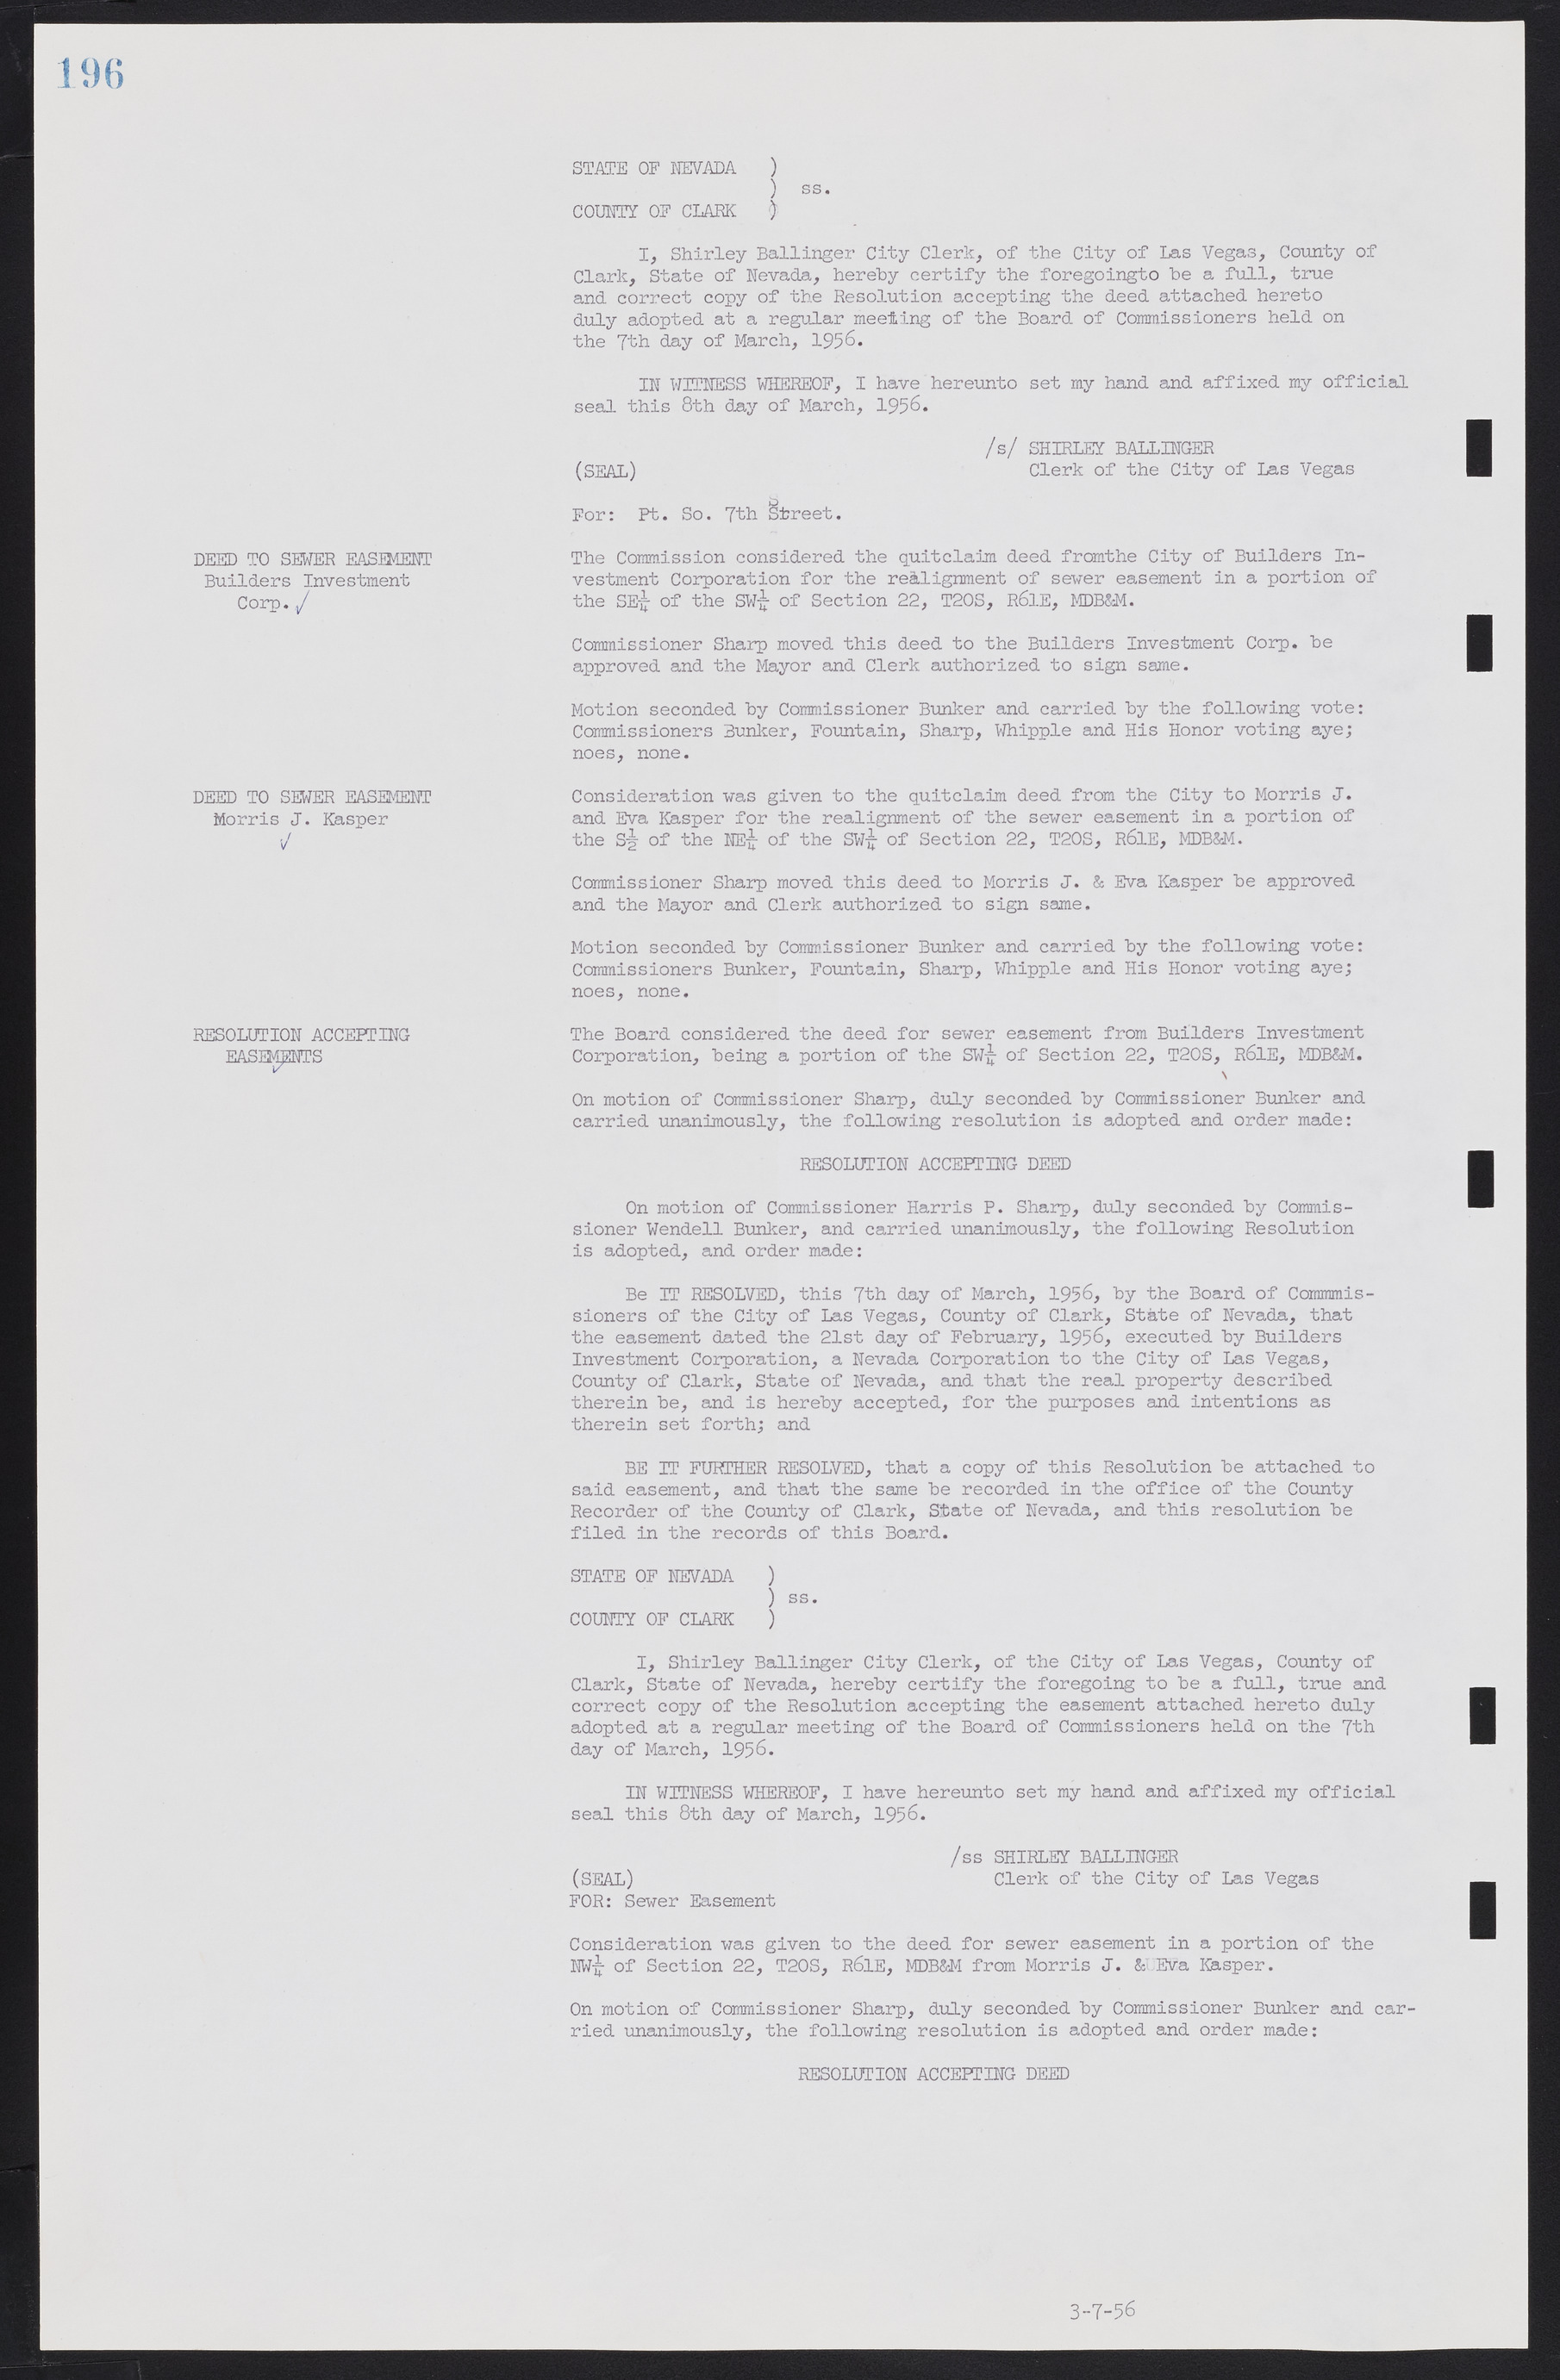 Las Vegas City Commission Minutes, September 21, 1955 to November 20, 1957, lvc000010-212